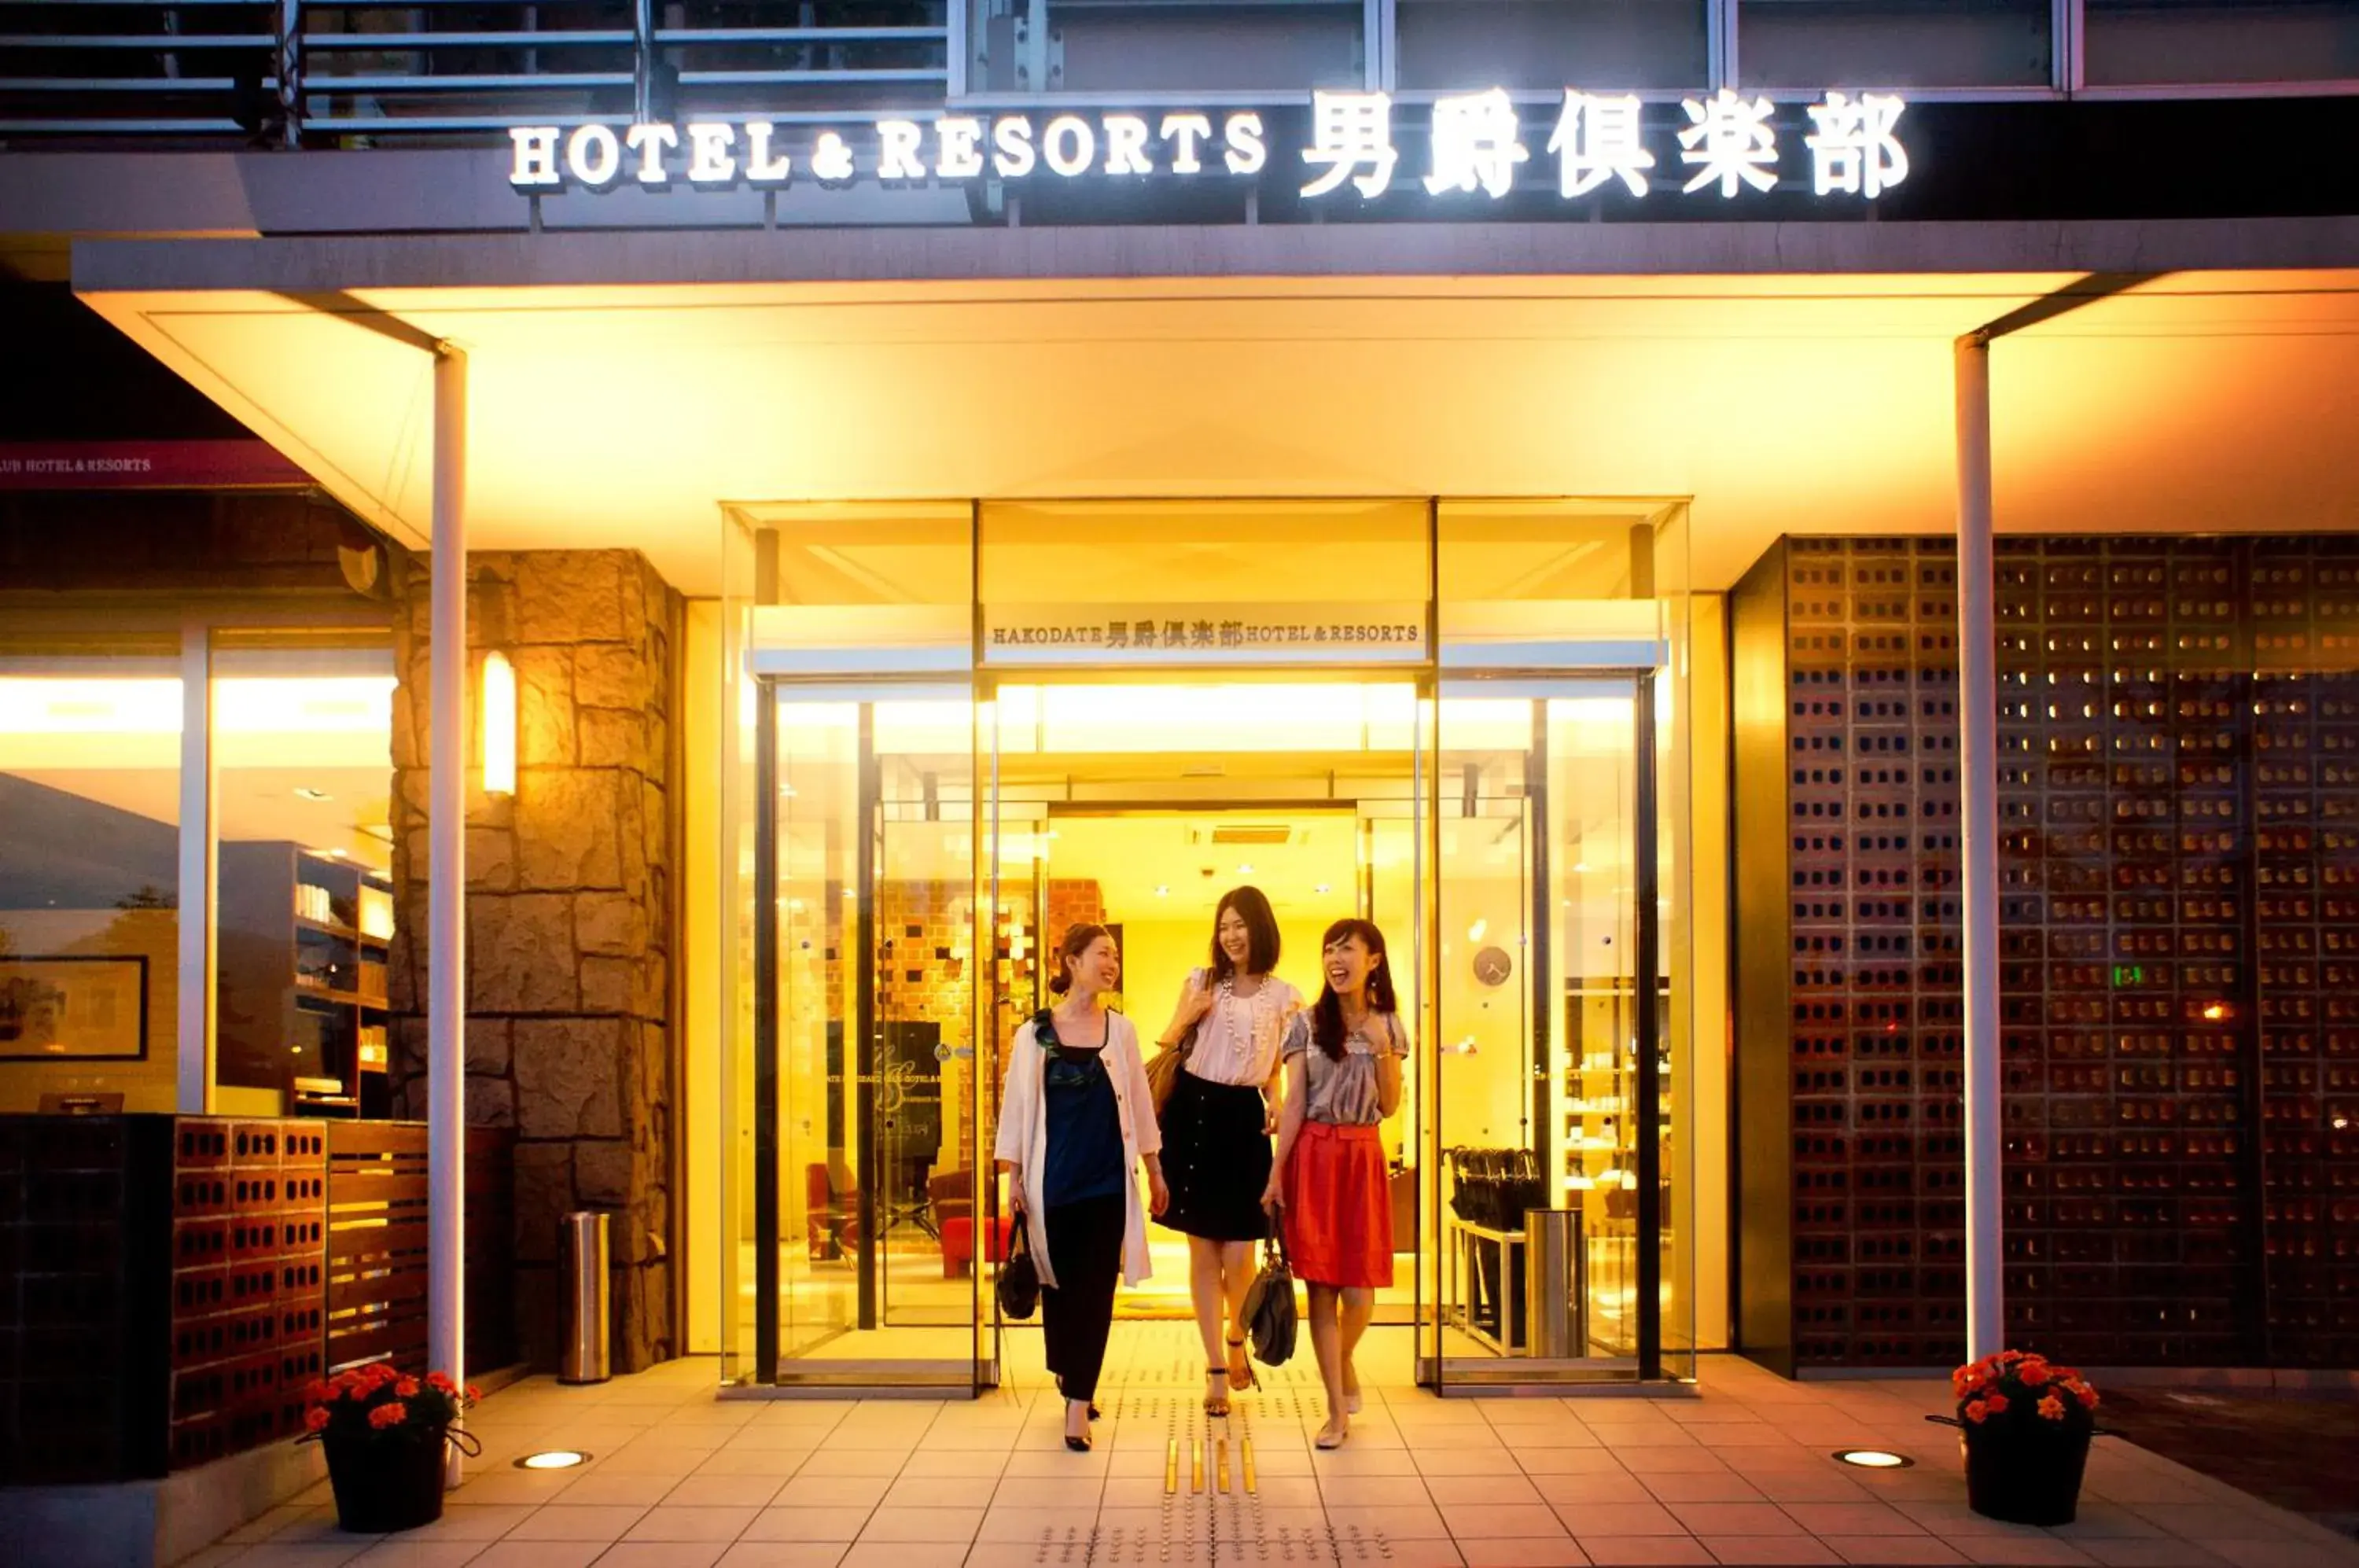 Facade/entrance in Hakodate Danshaku Club Hotel & Resorts